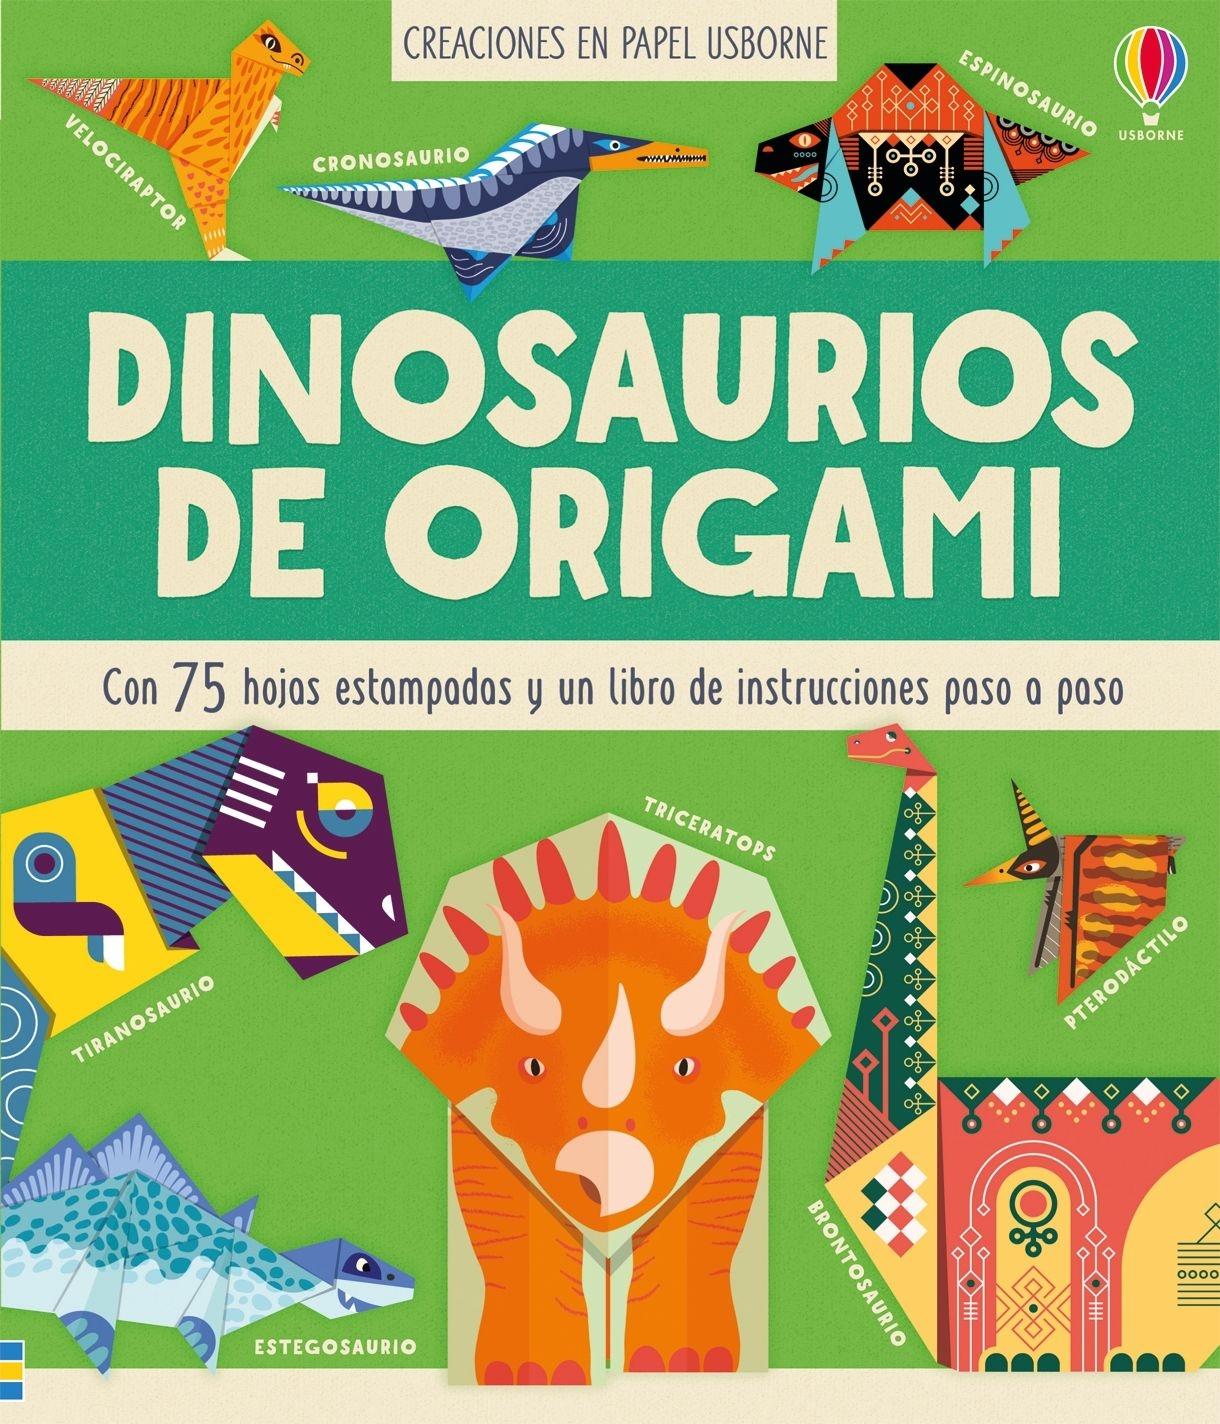 Dinosaurios de origami. 